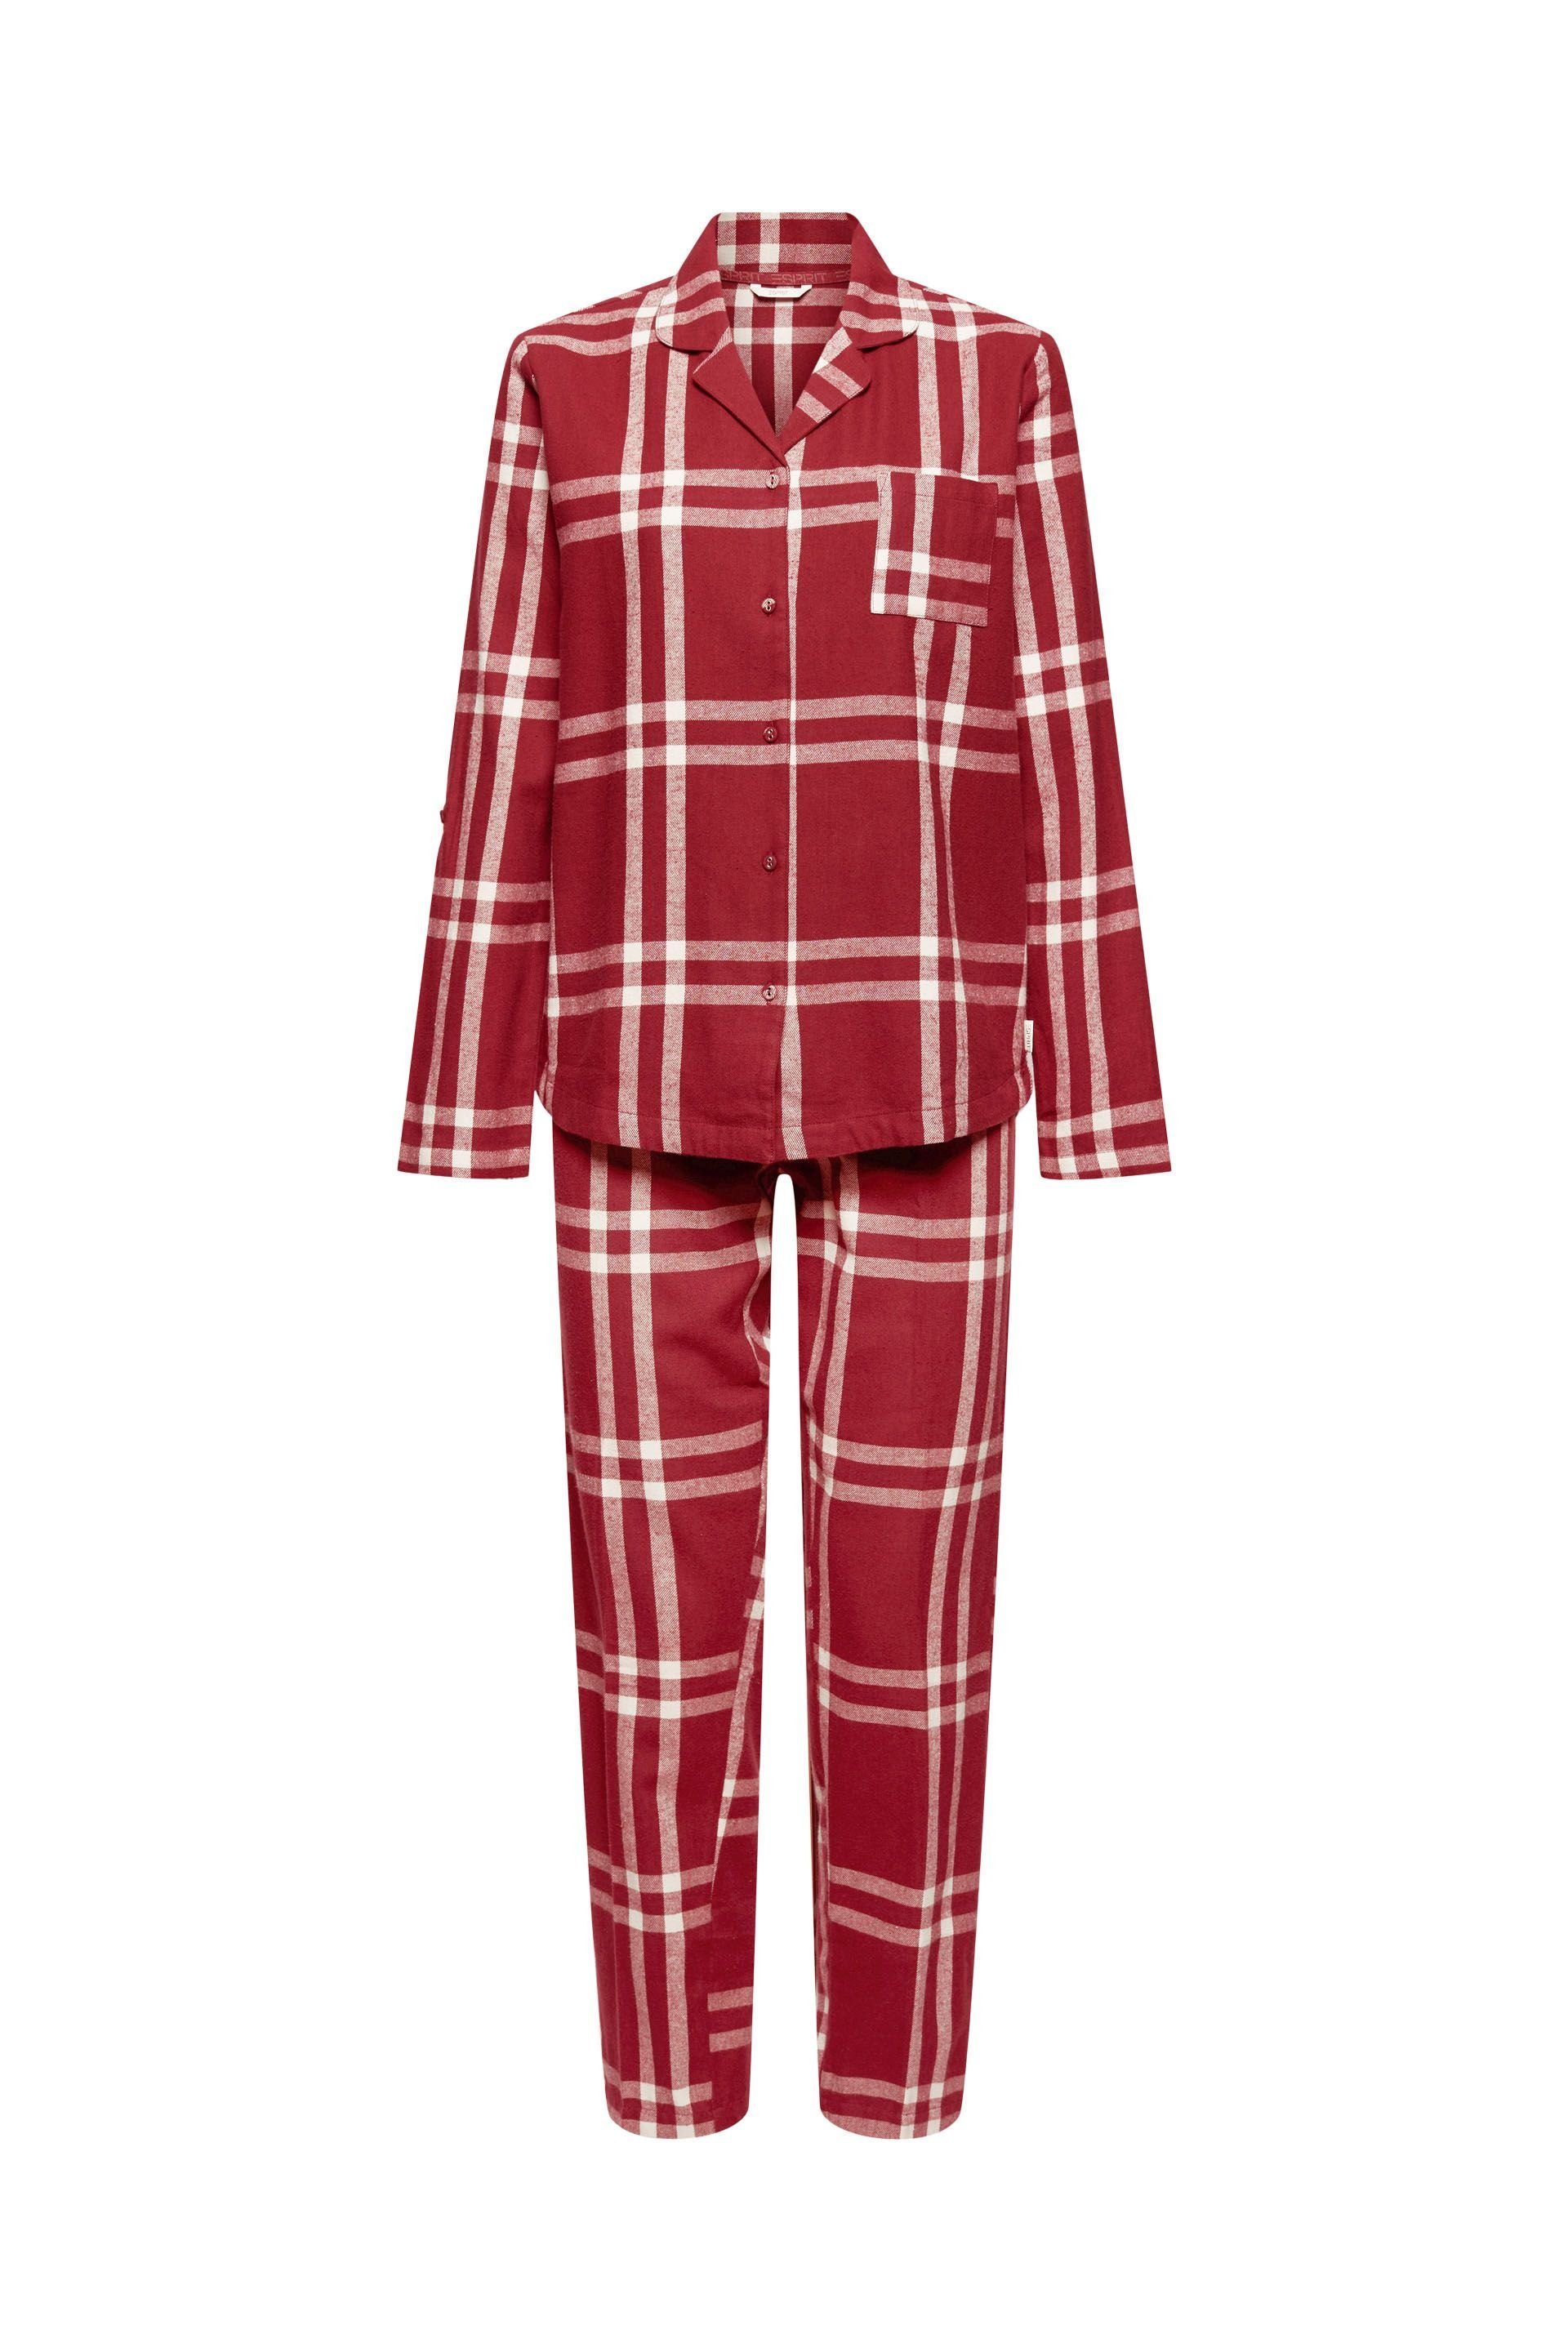 red Karierter Esprit Pyjama Flanell-Pyjama cherry